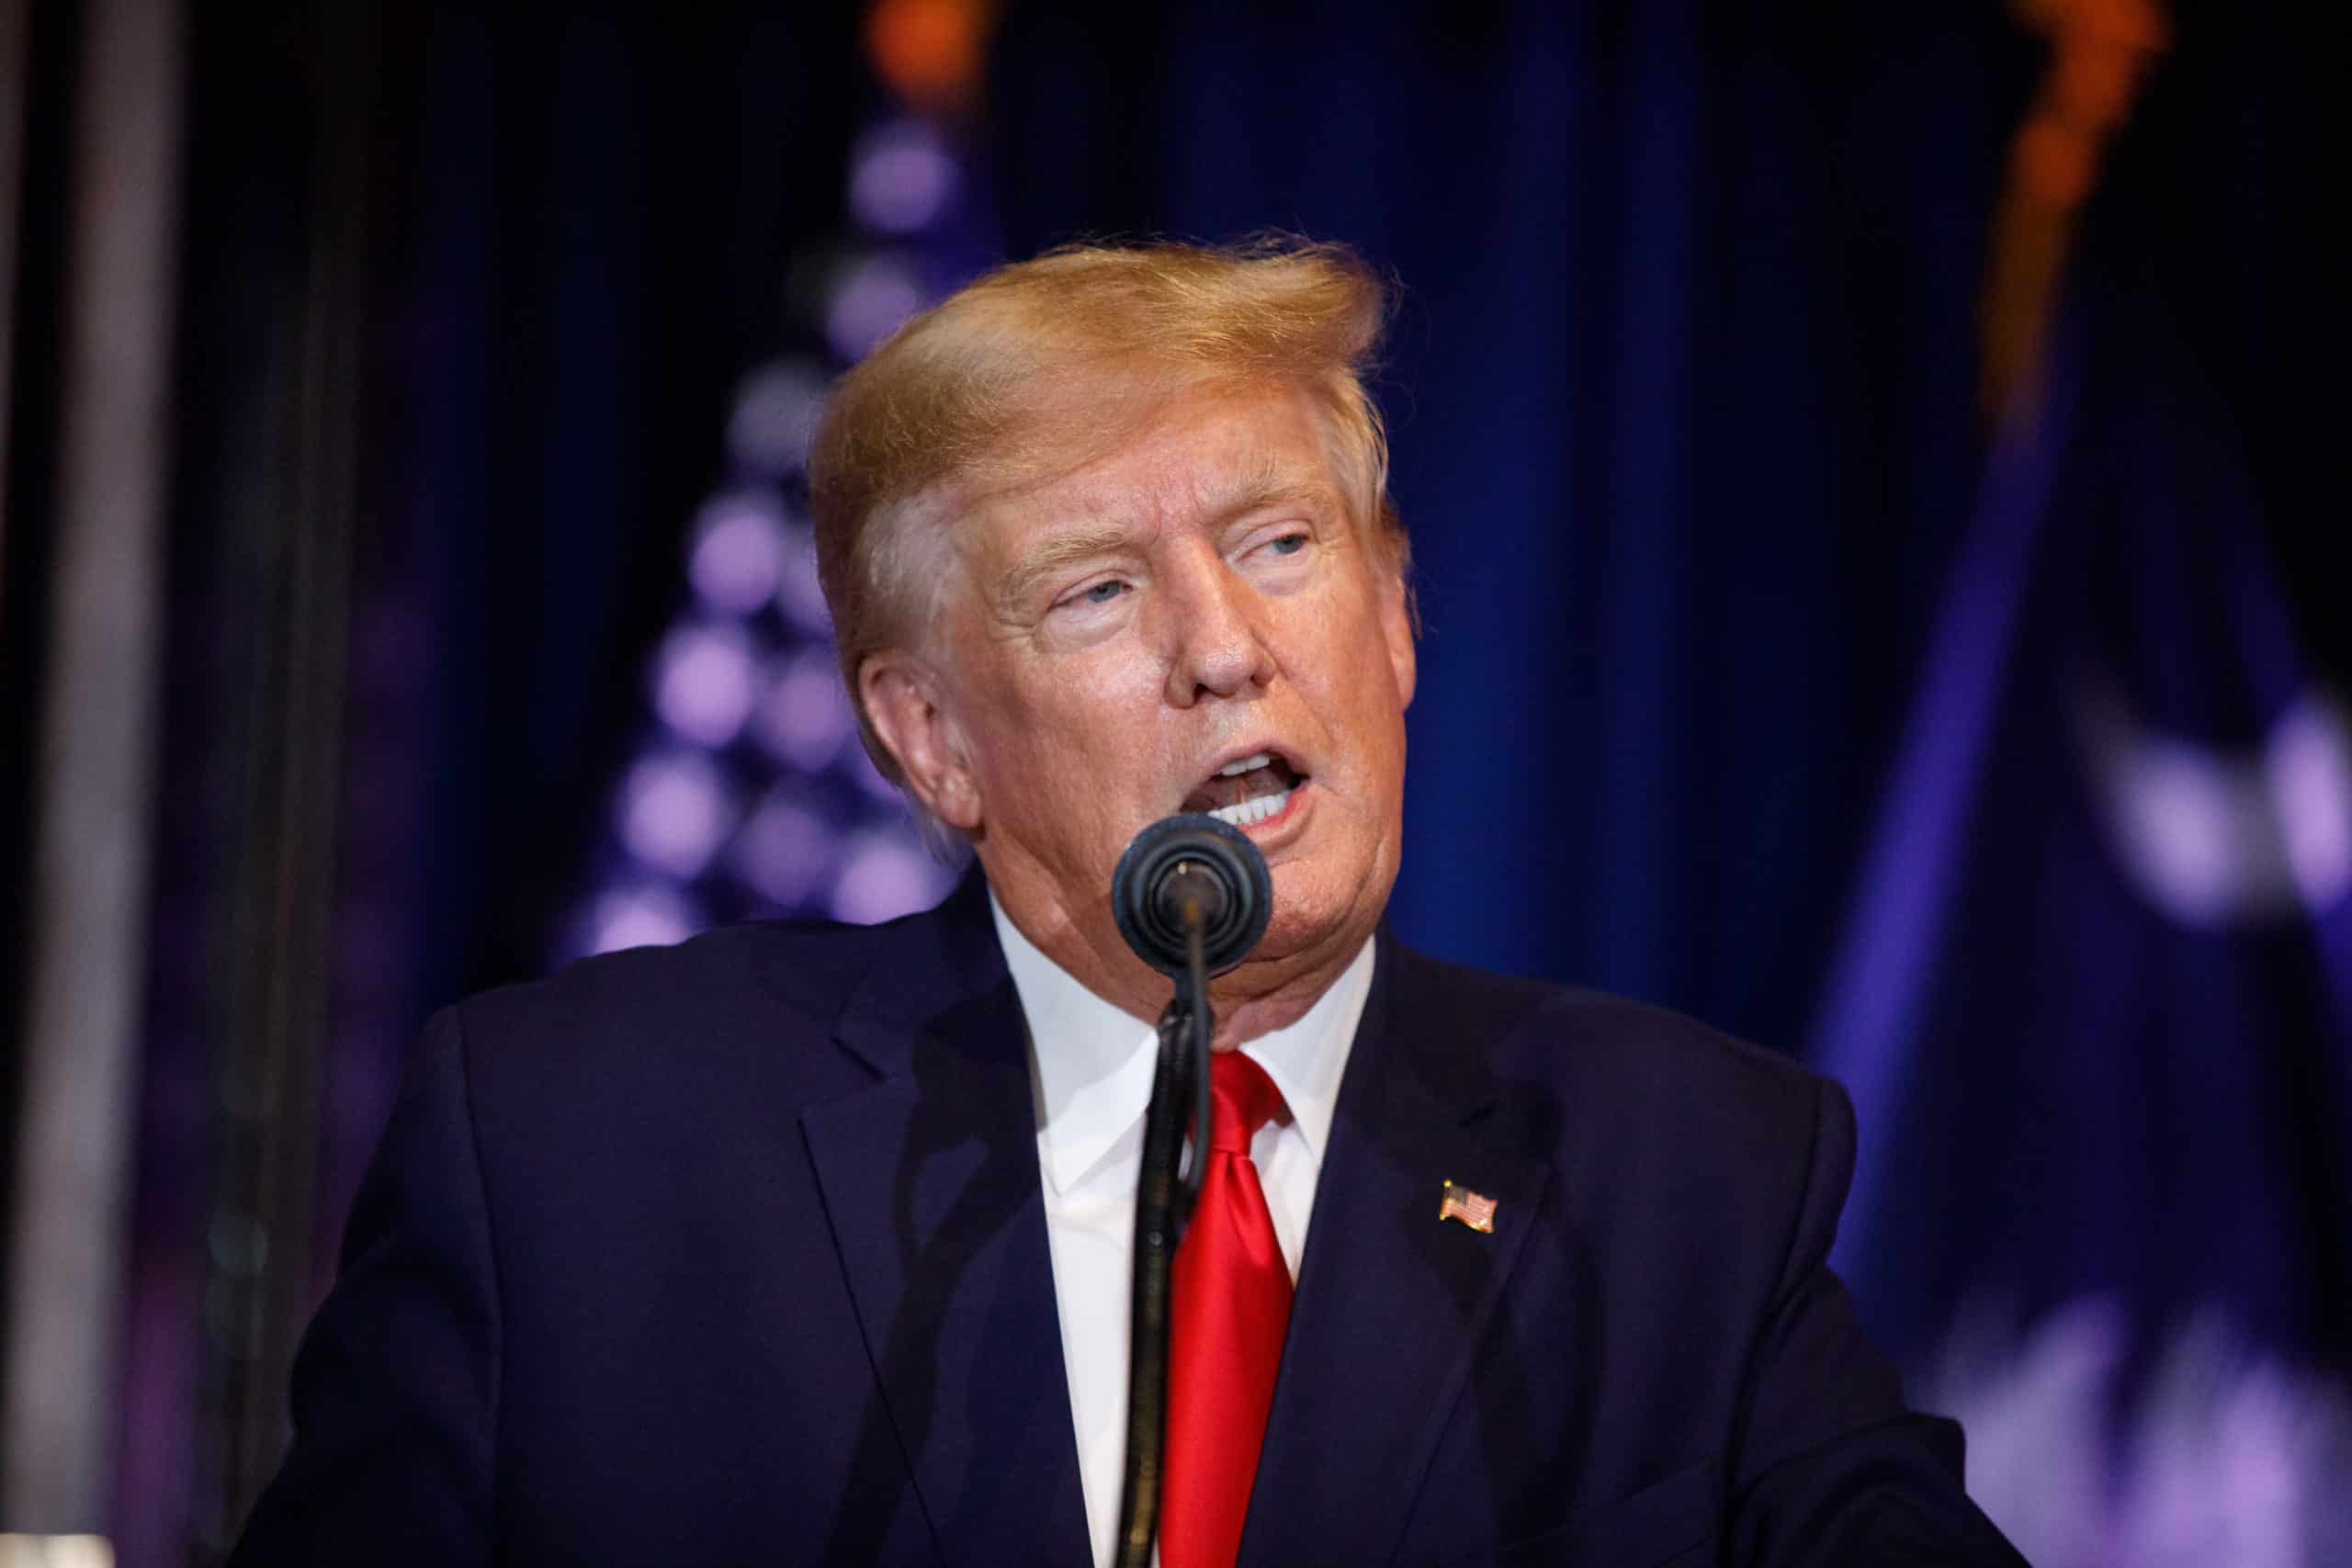 Trump creó “falsa expectativa” sobre su detención, dice fiscal